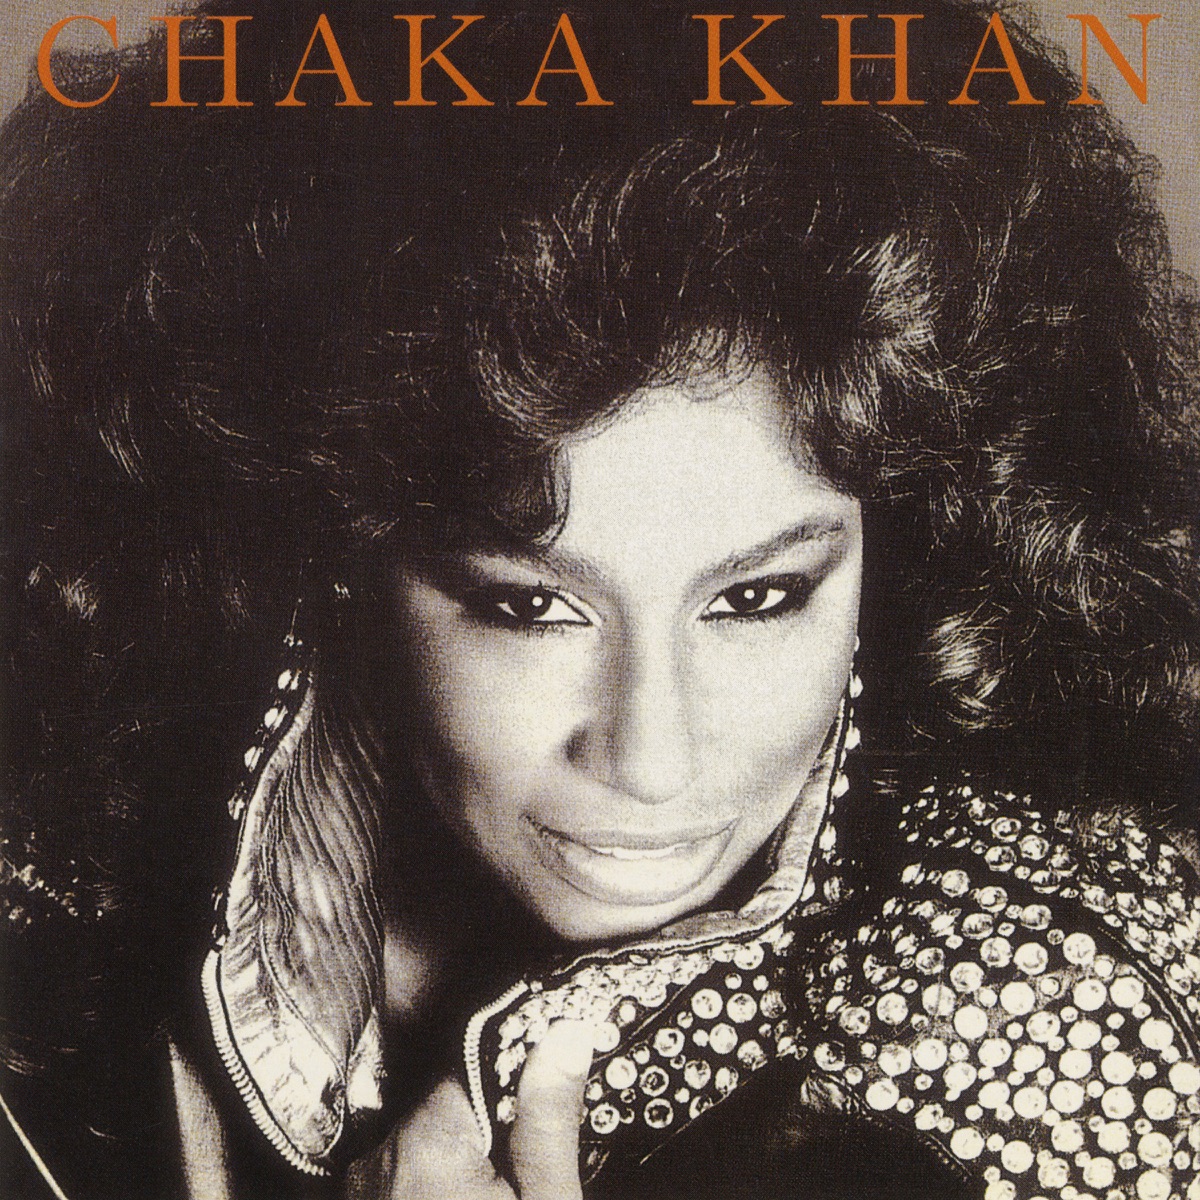 Chaka Khan - Album by Chaka Khan - Apple Music